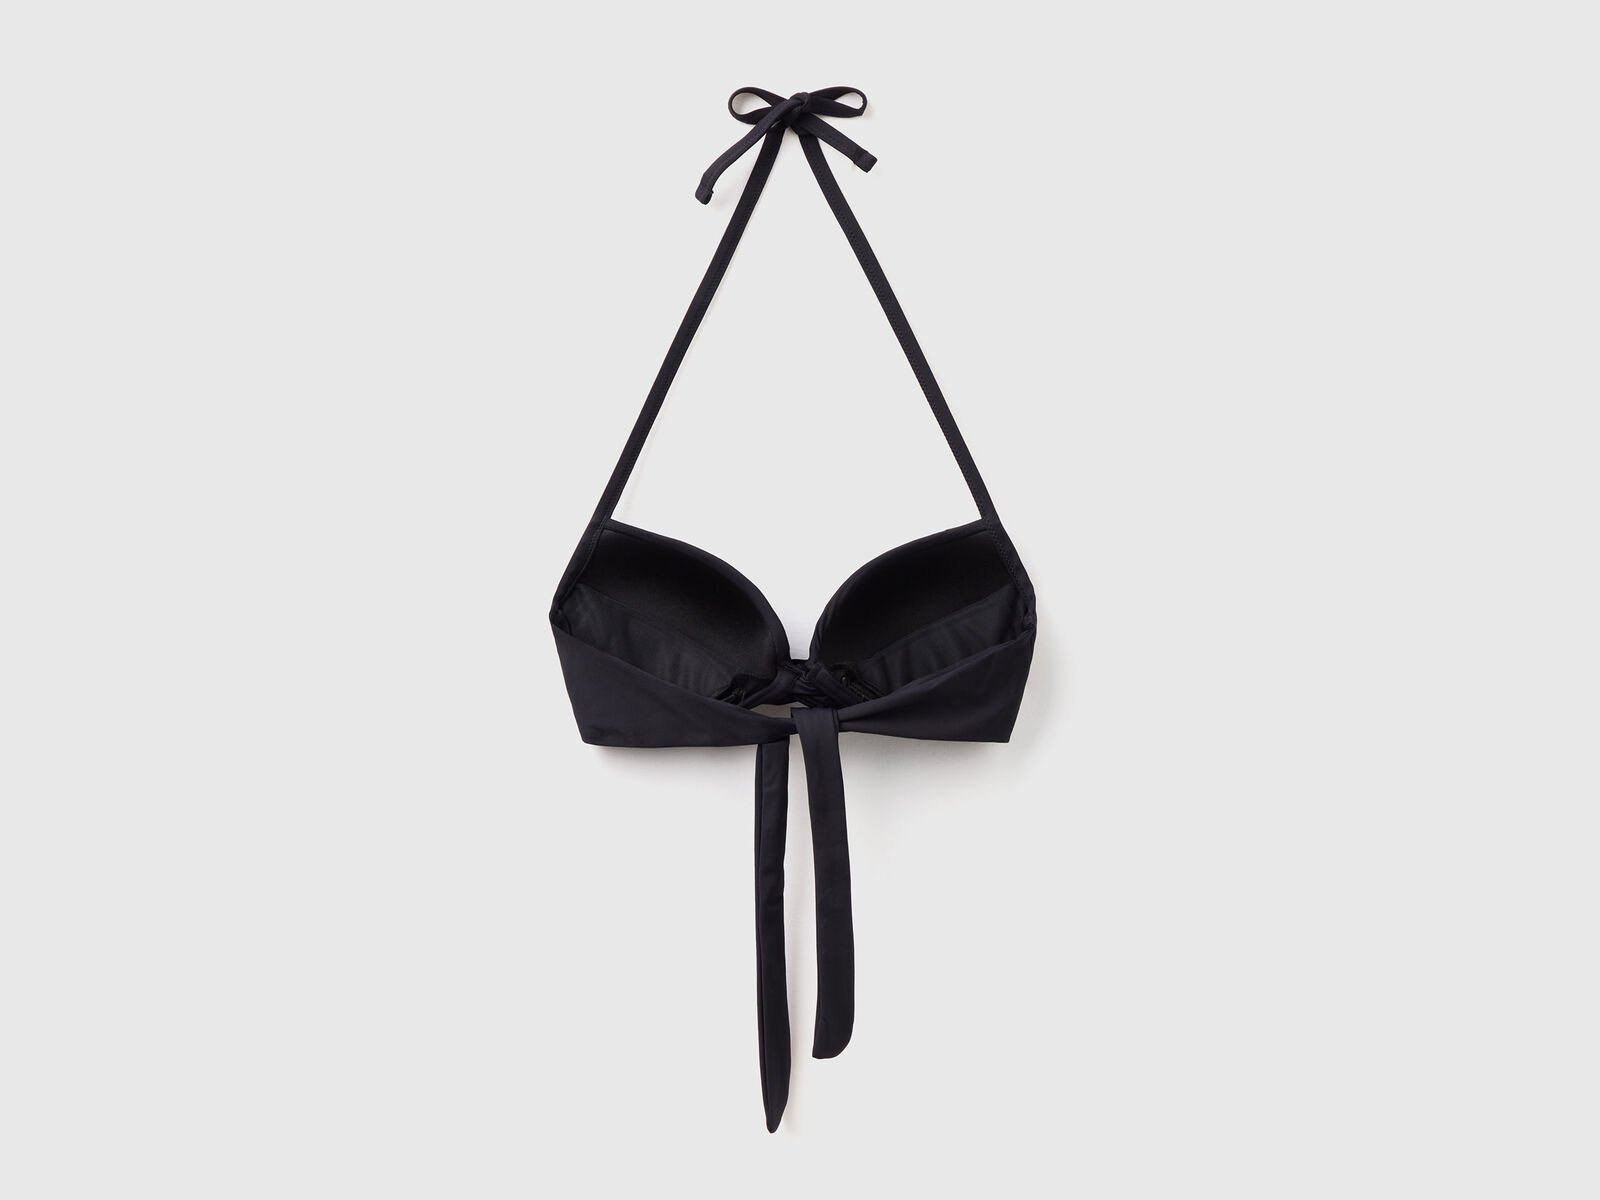 Black Bow Super Stretch Bikini Culotte, Women's Fashion